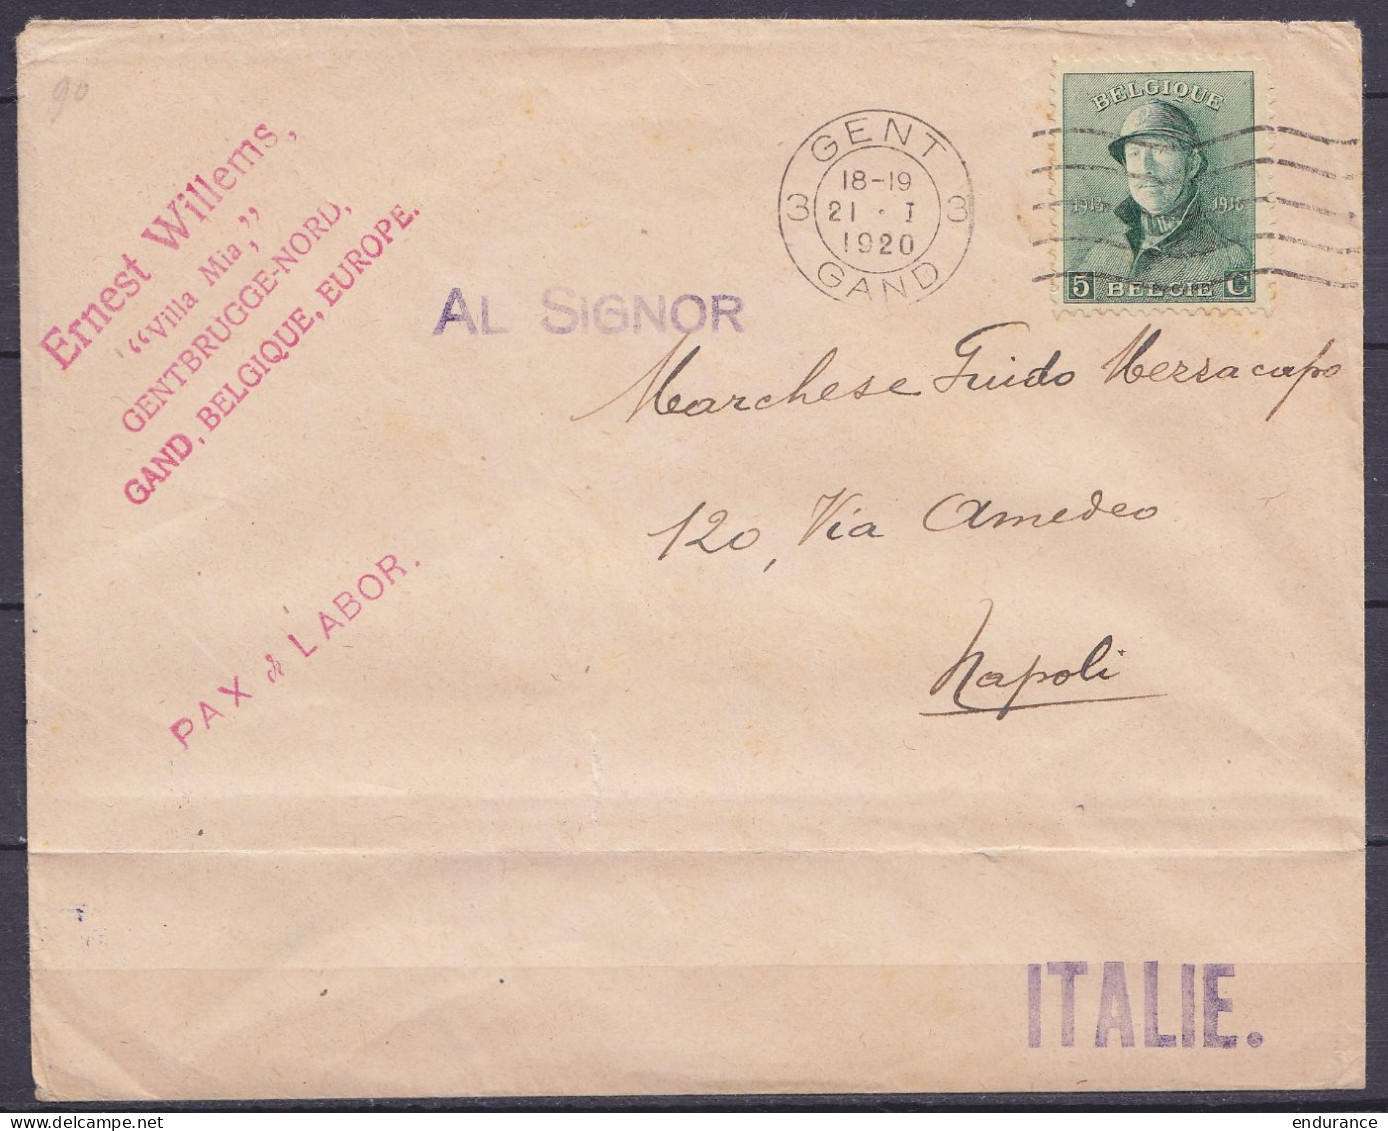 Env. Affr. N°167 (tarif Imprimés) Flam. "GENT 3/12.I 1920/ GAND 3" Pour NAPOLI (Naples) Italie - 1919-1920  Re Con Casco